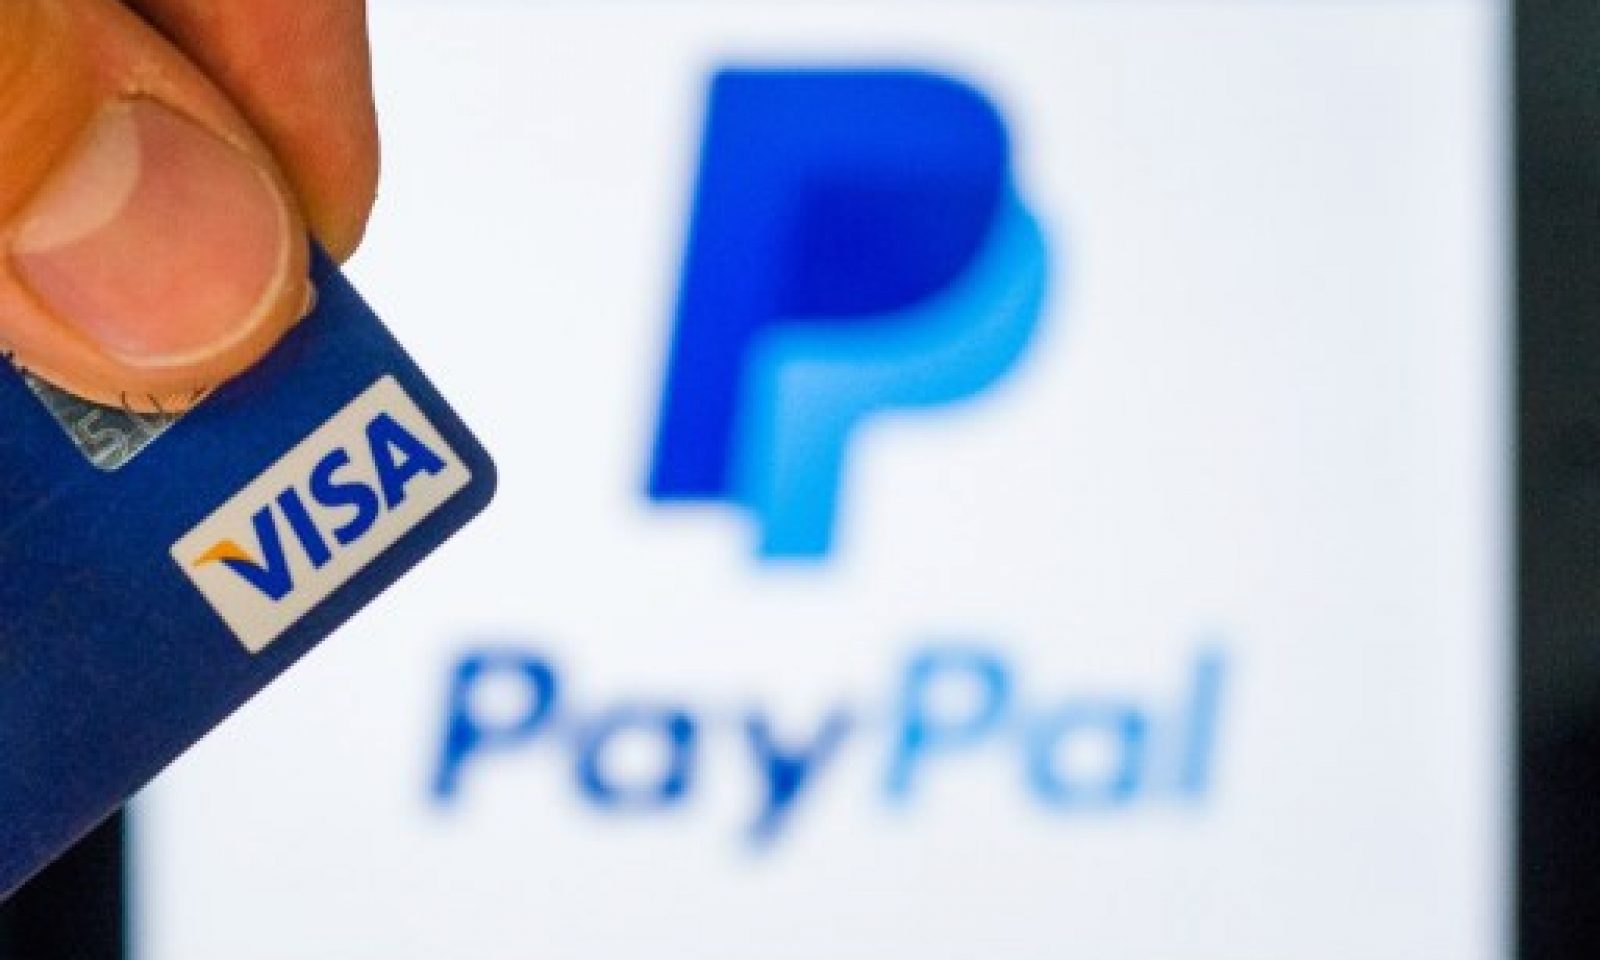 Visa και PayPal επεκτείνουν τη συνεργασία τους στην Ευρώπη